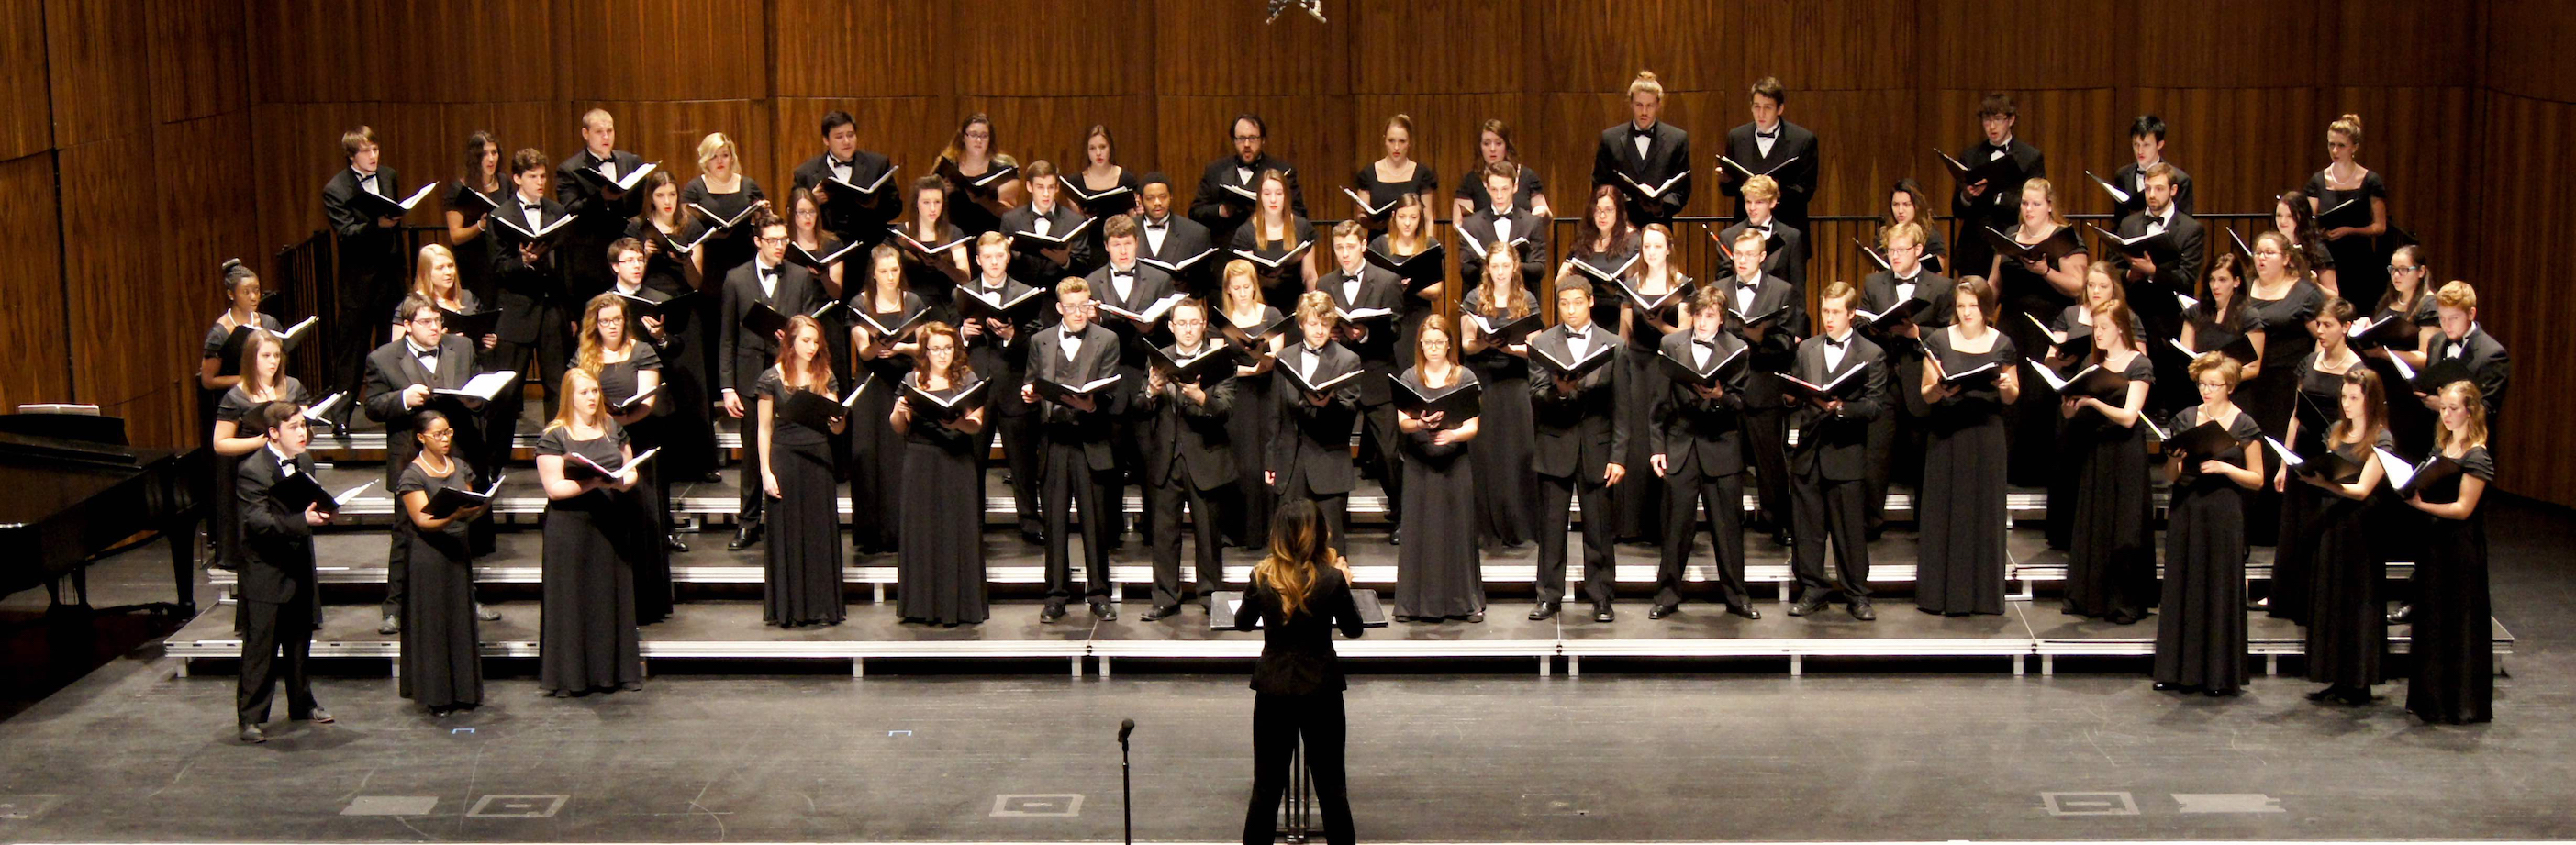 Concert Choir Cropped2